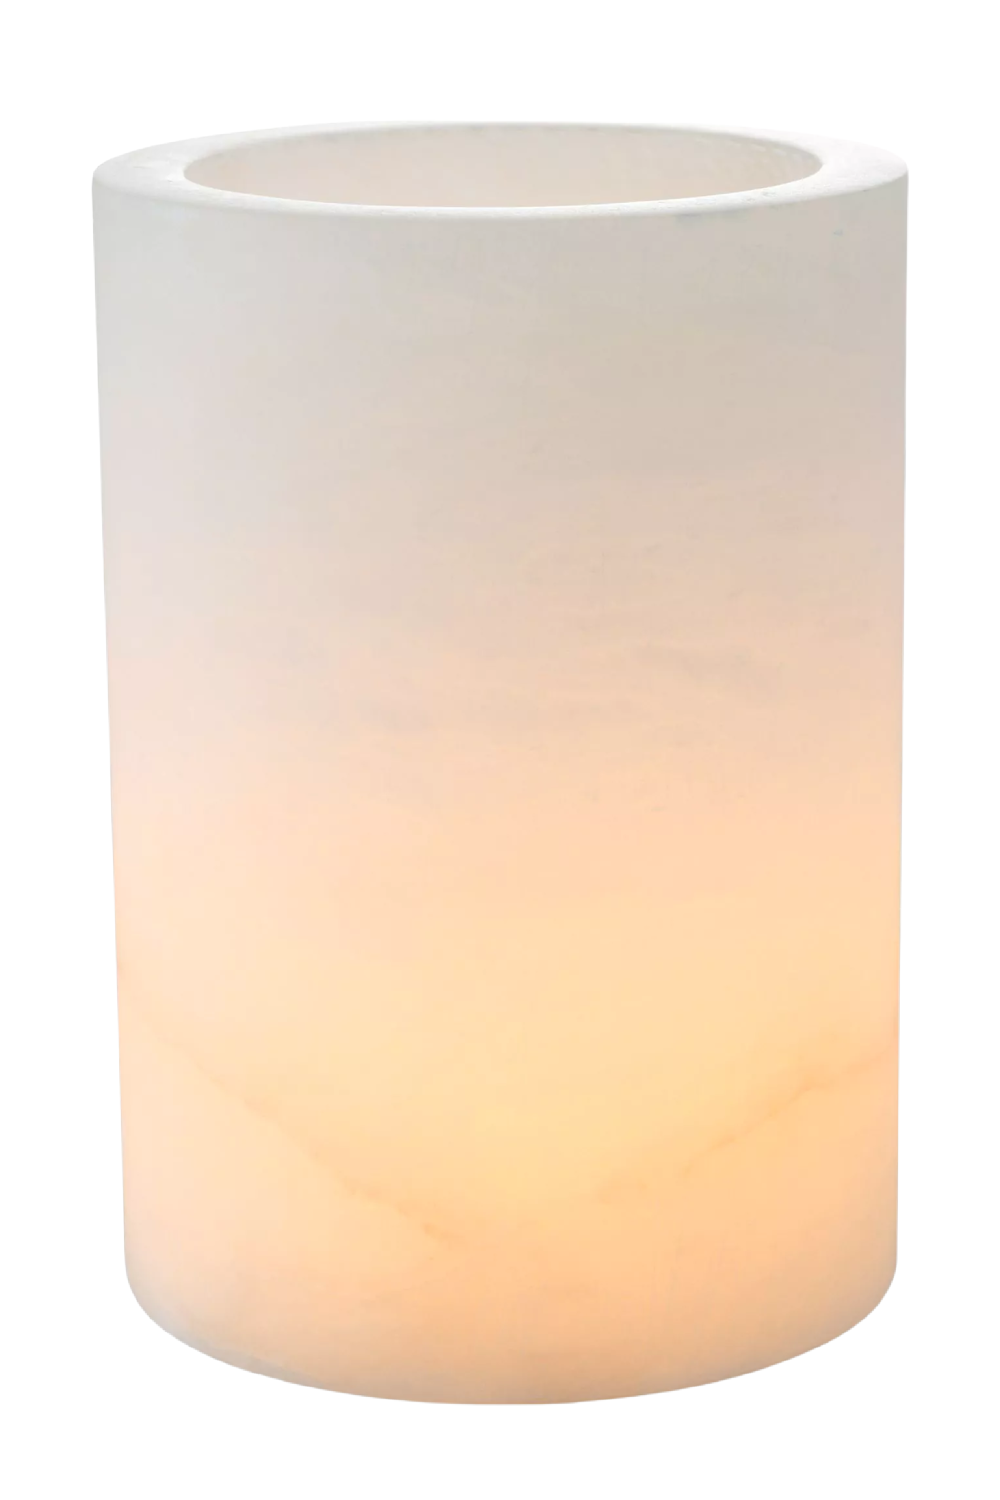 Cylindrical Translucent Alabaster Candle Holder | Eichholtz Mercer | OROA.com